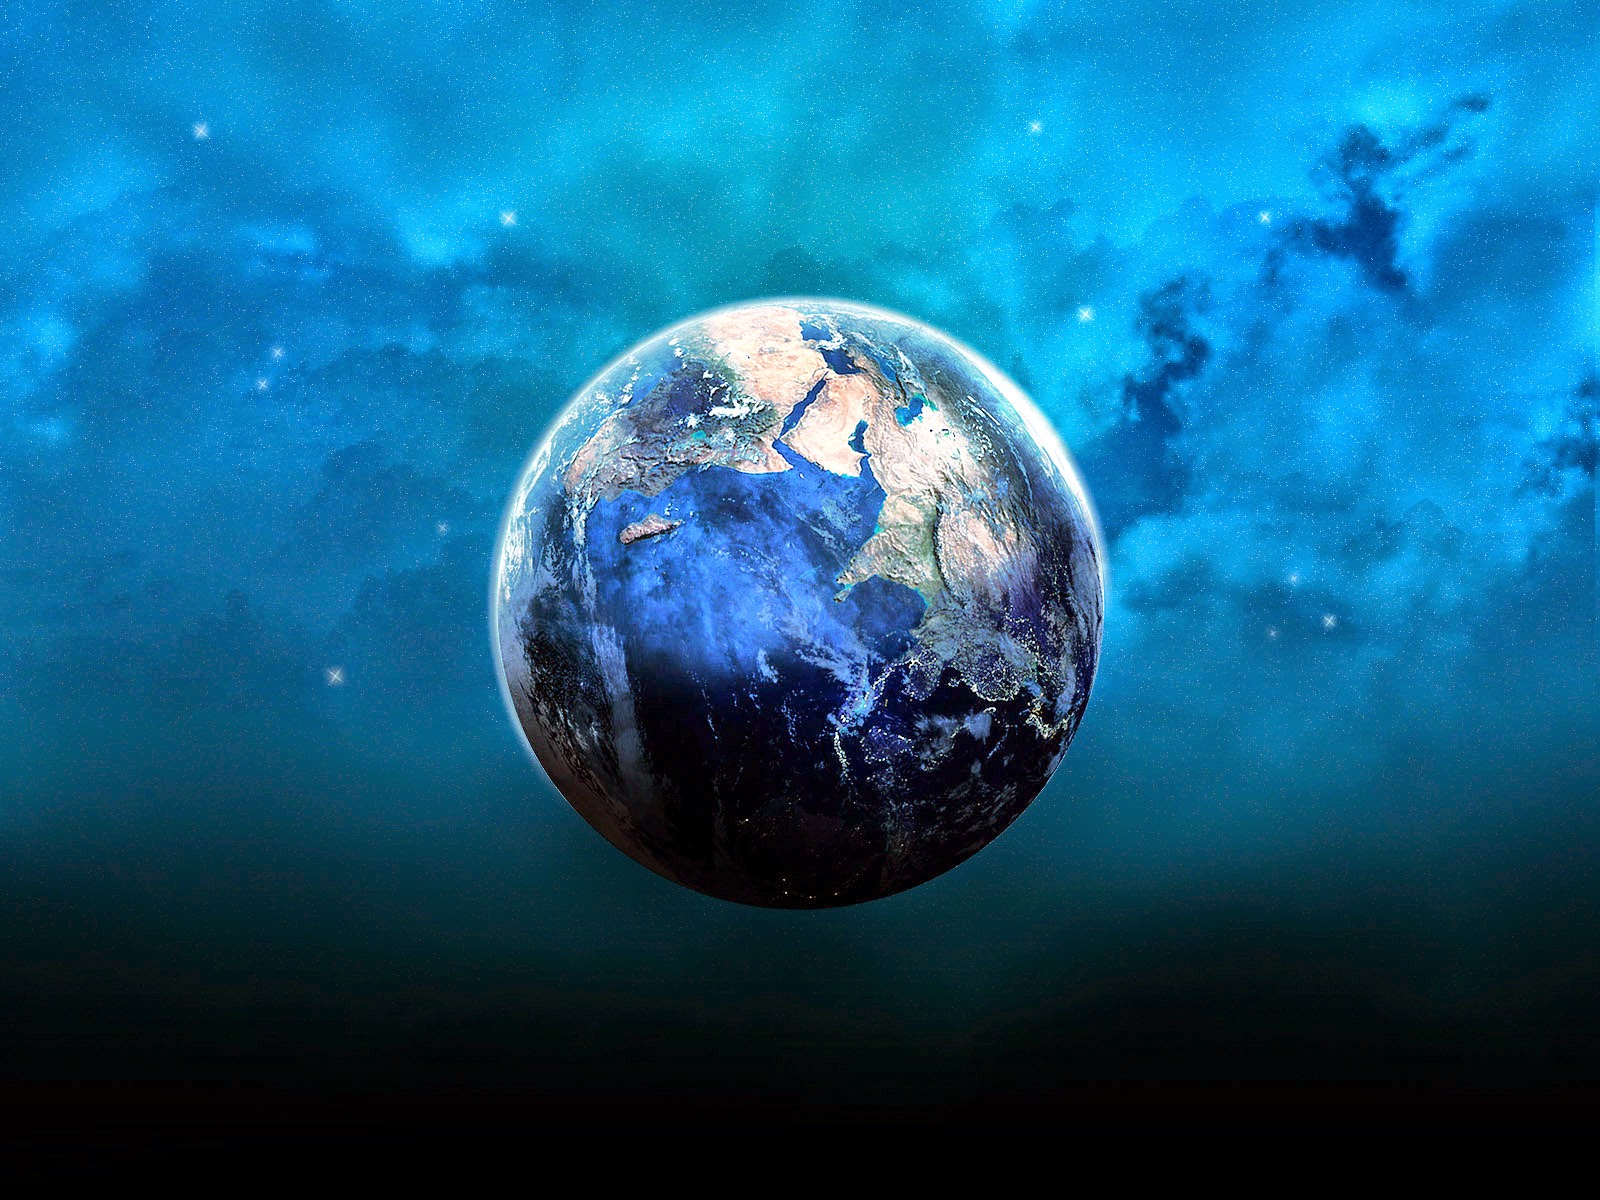 Earth - HD Wallpapers | Earth Blog